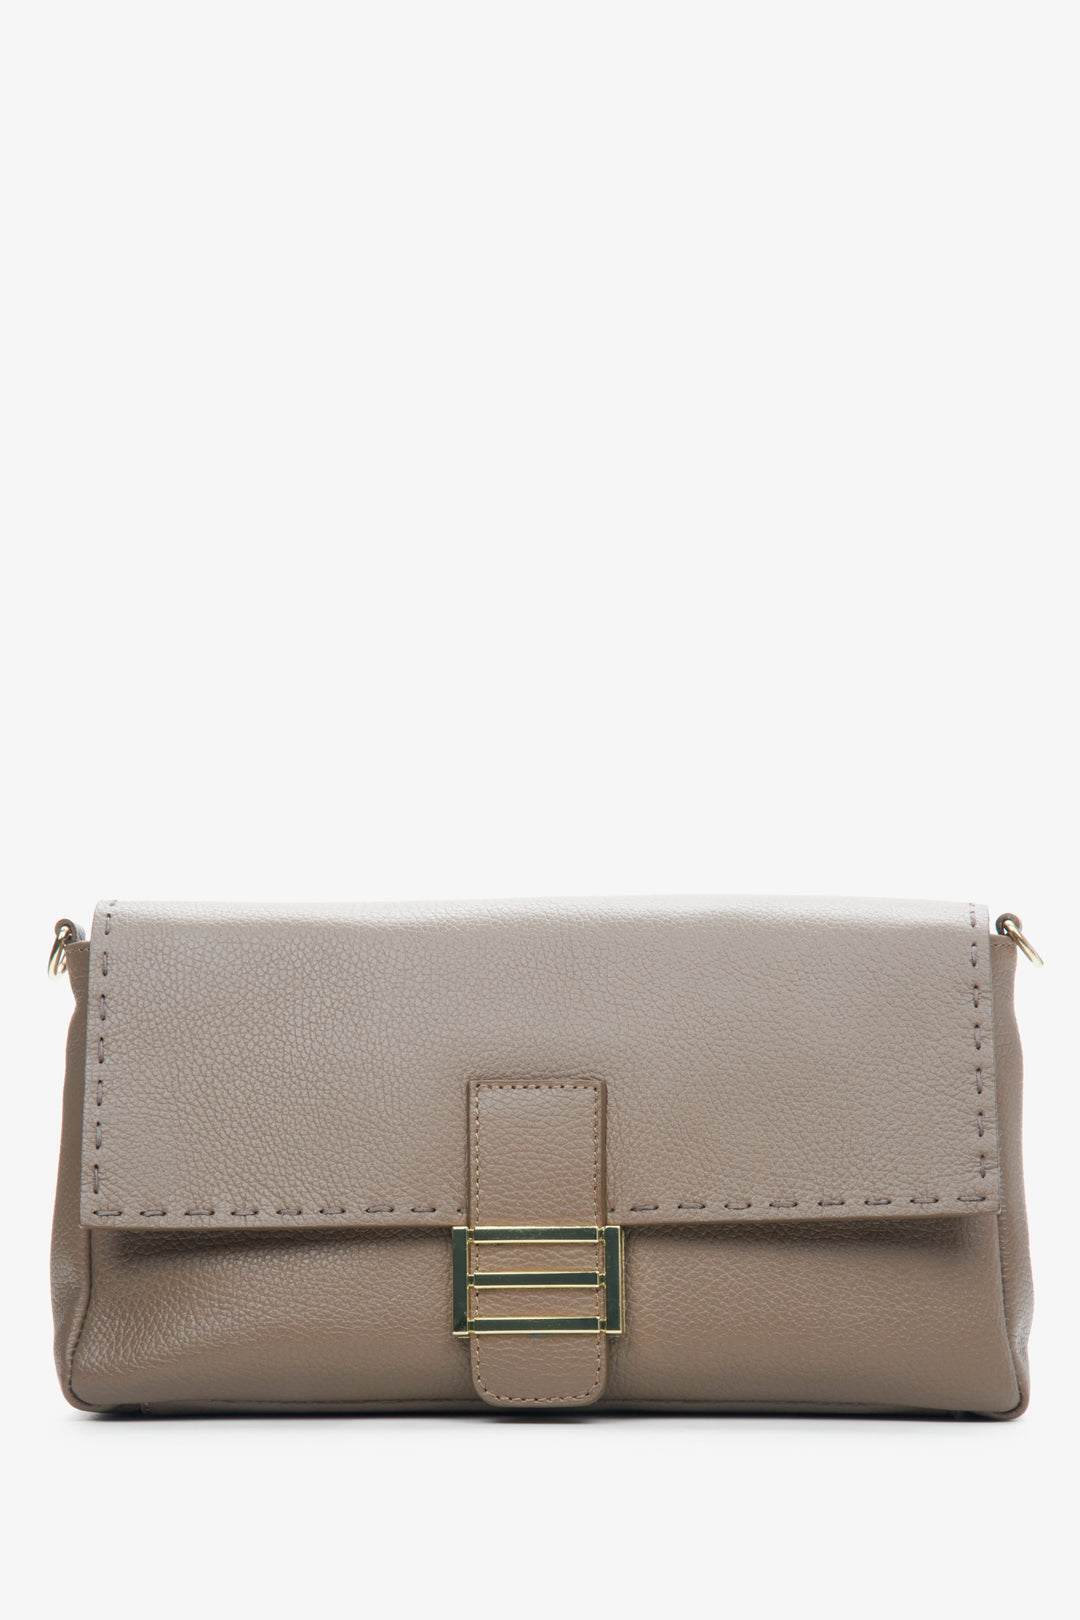 Women's Grey & Beige Handbag made of Italian Genuine Leather with Golden Hardware Estro ER00114110.